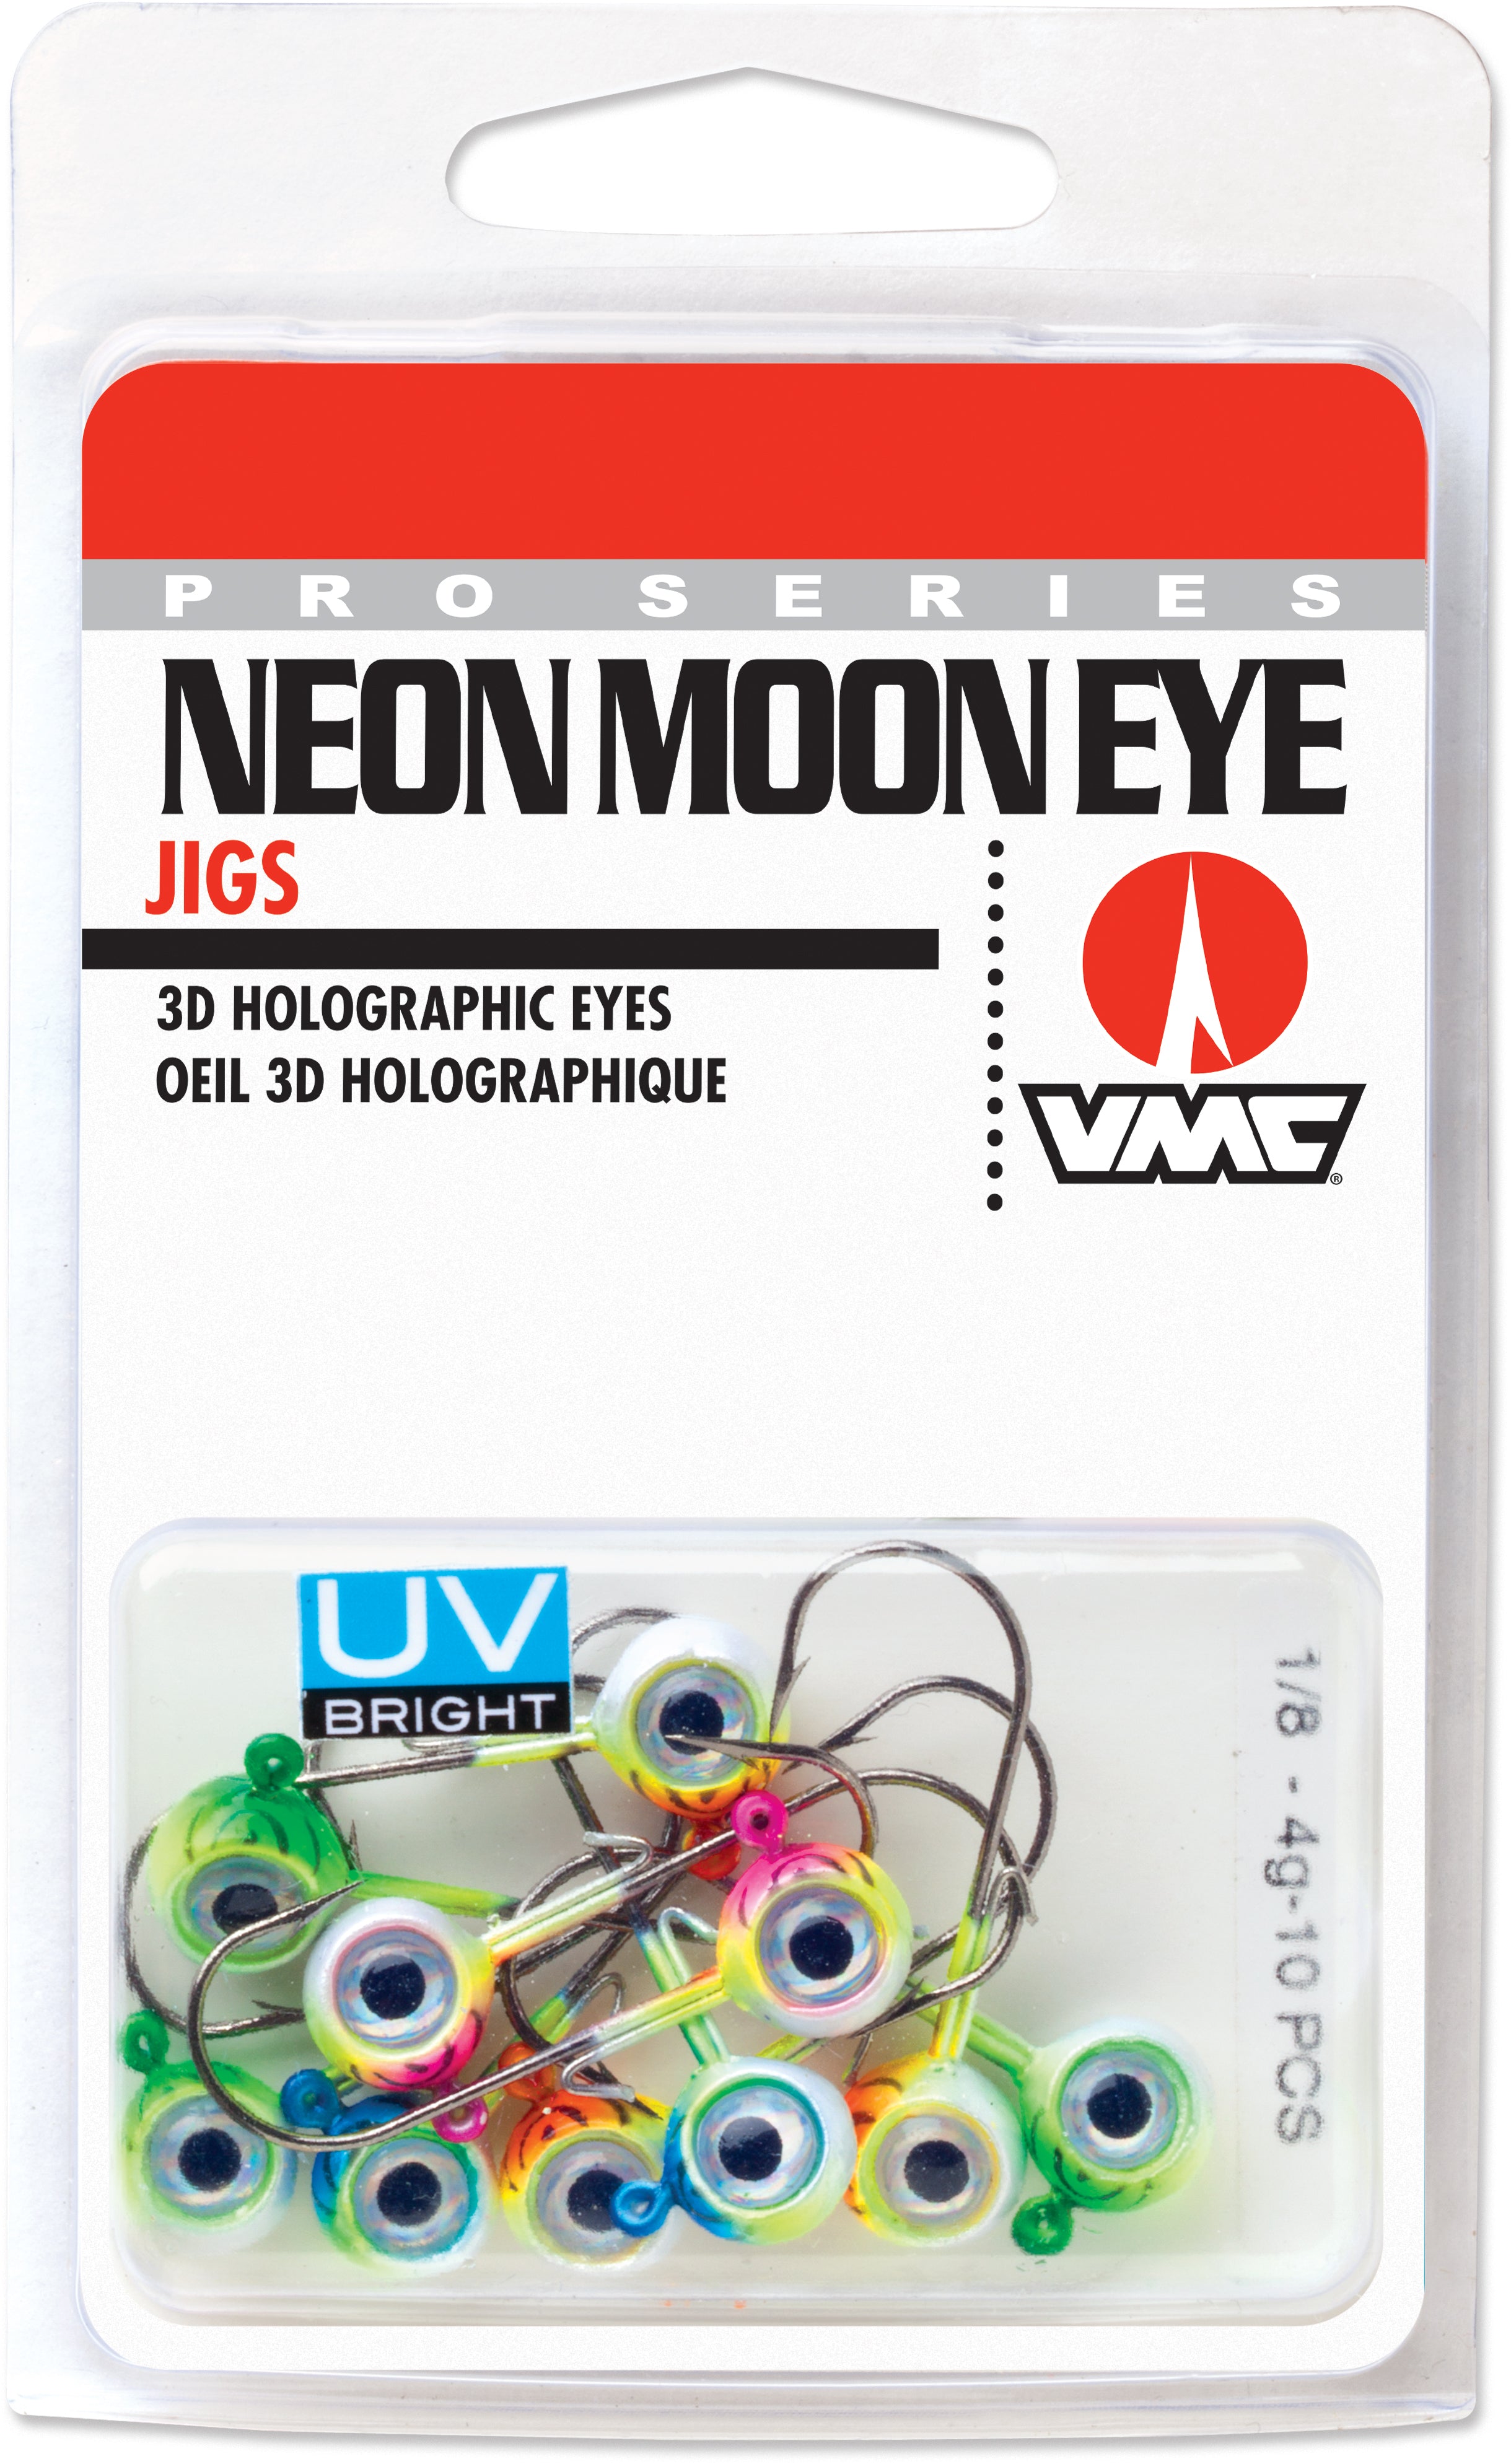 VMC Neon Moon Eye Jig UV Kit 1/8 oz